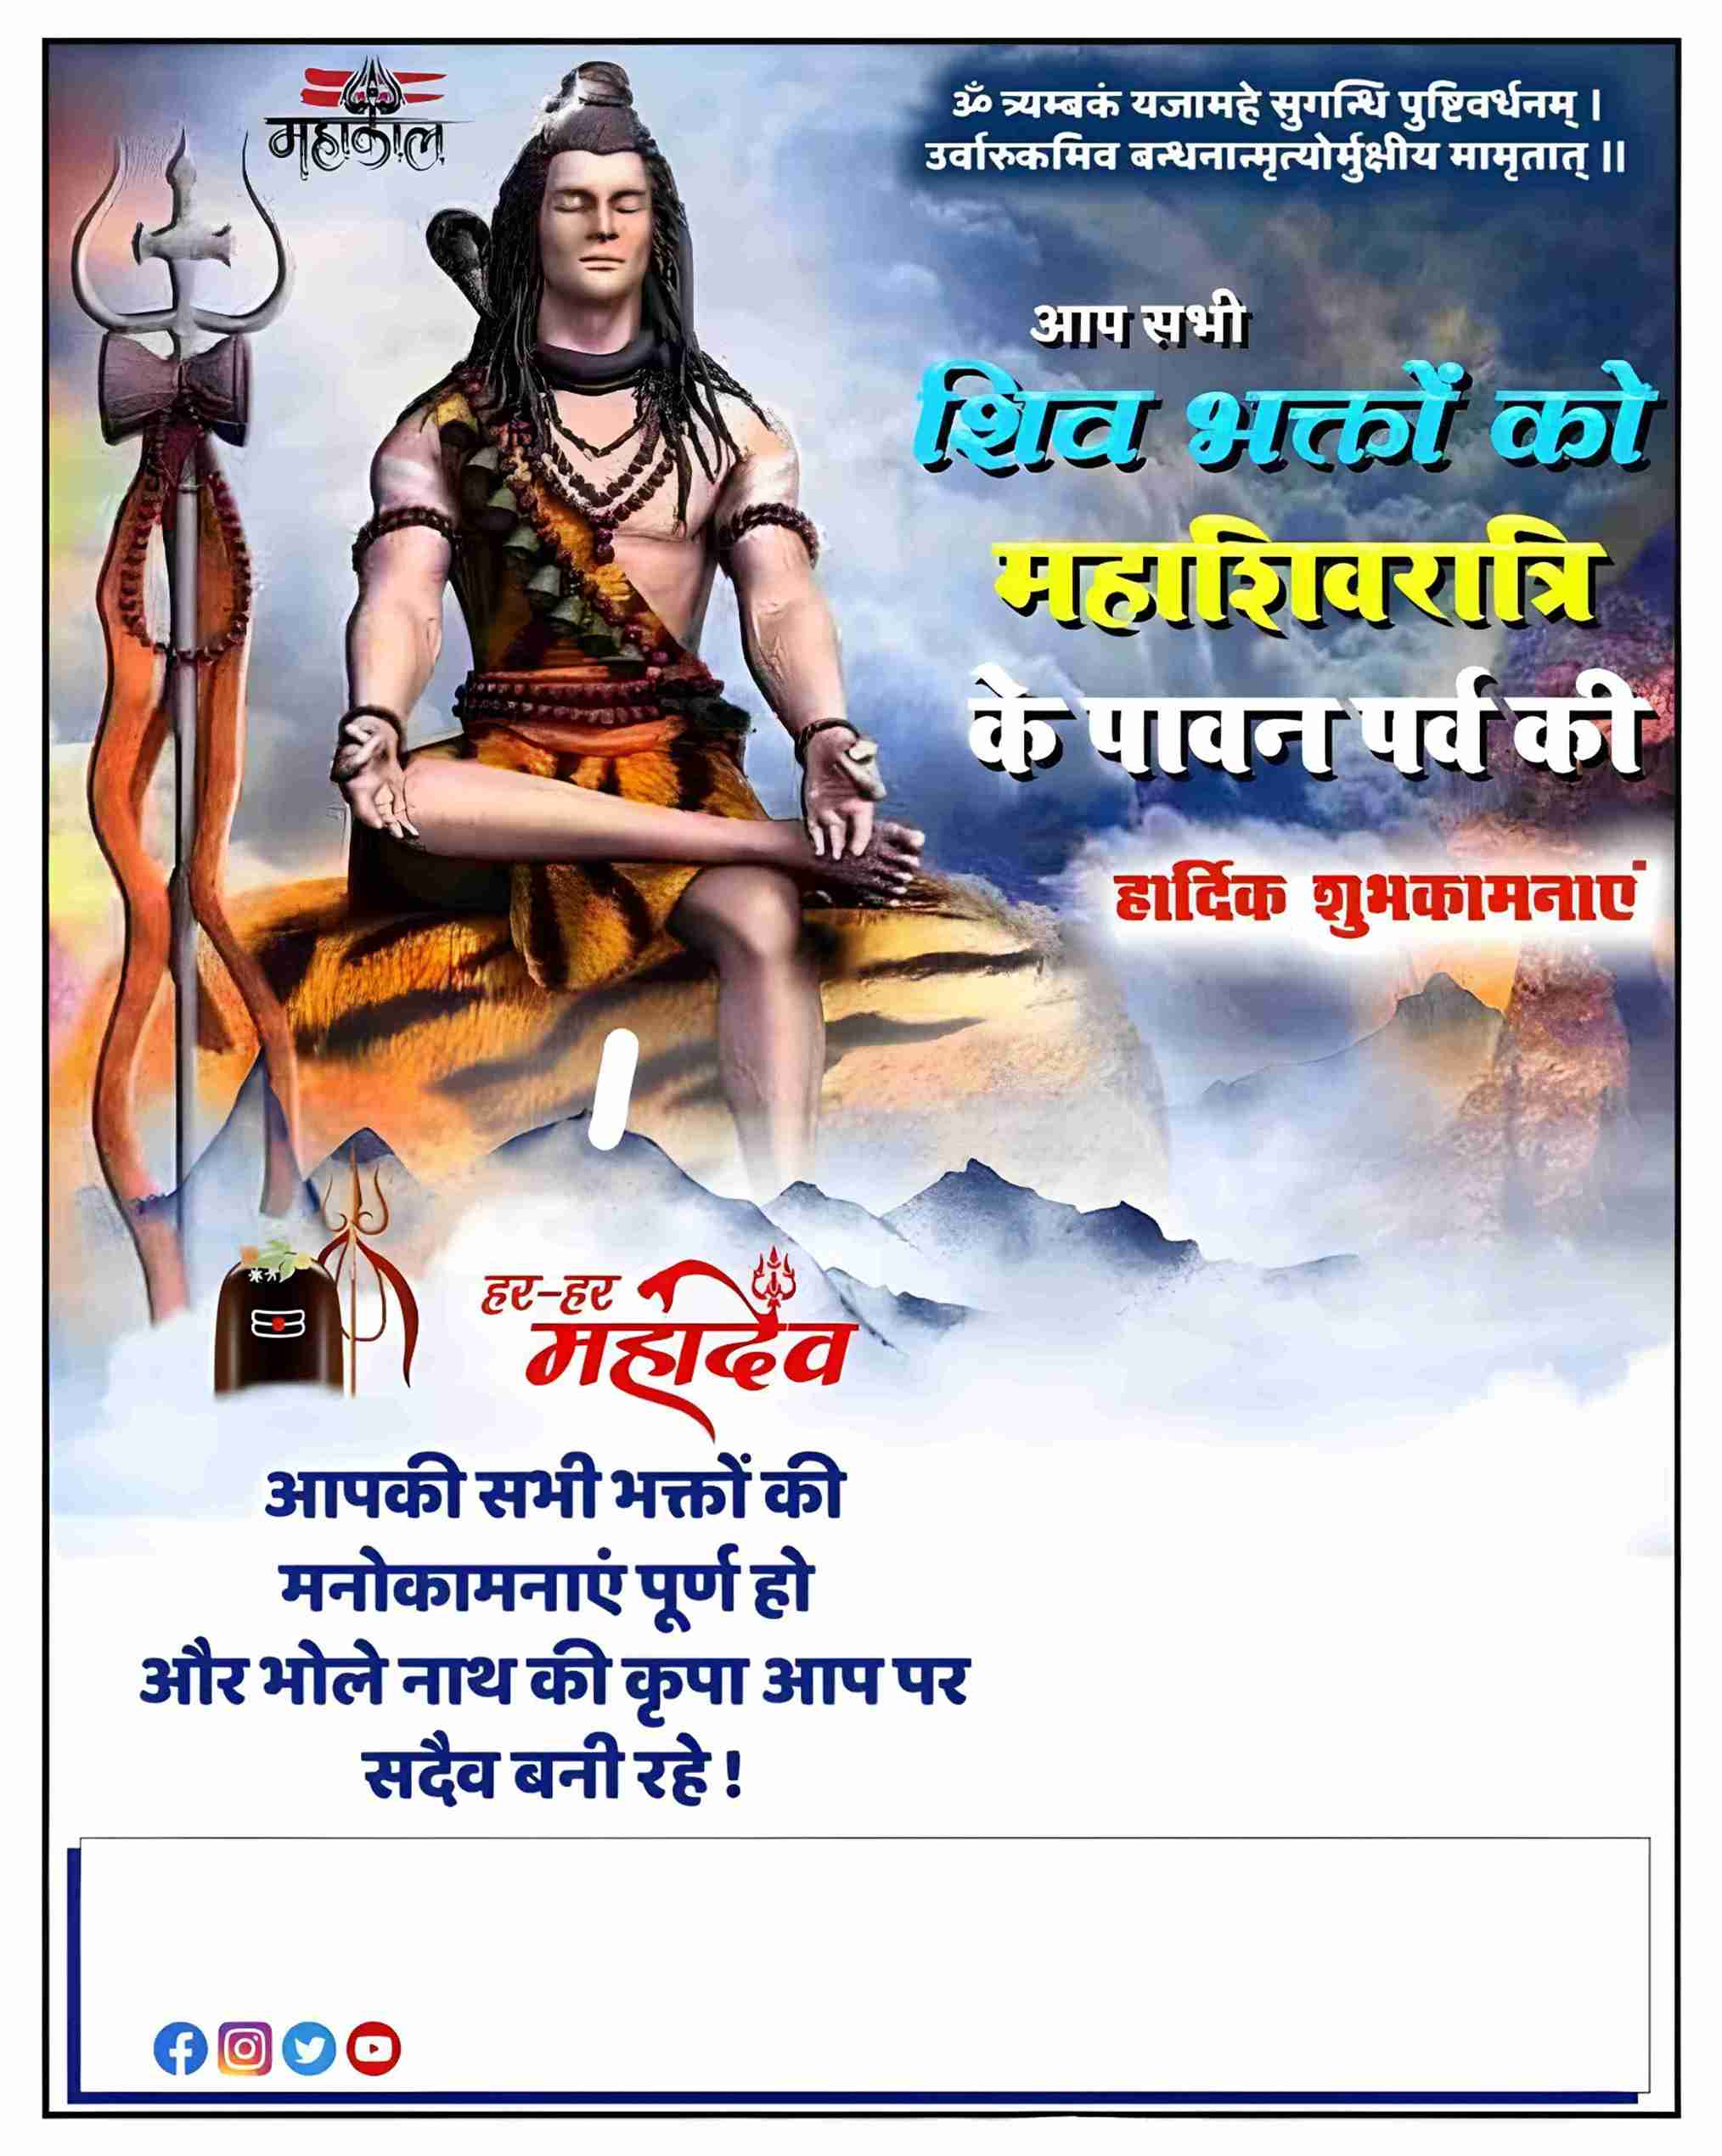 Maha Shivratri wishes banner in hindi